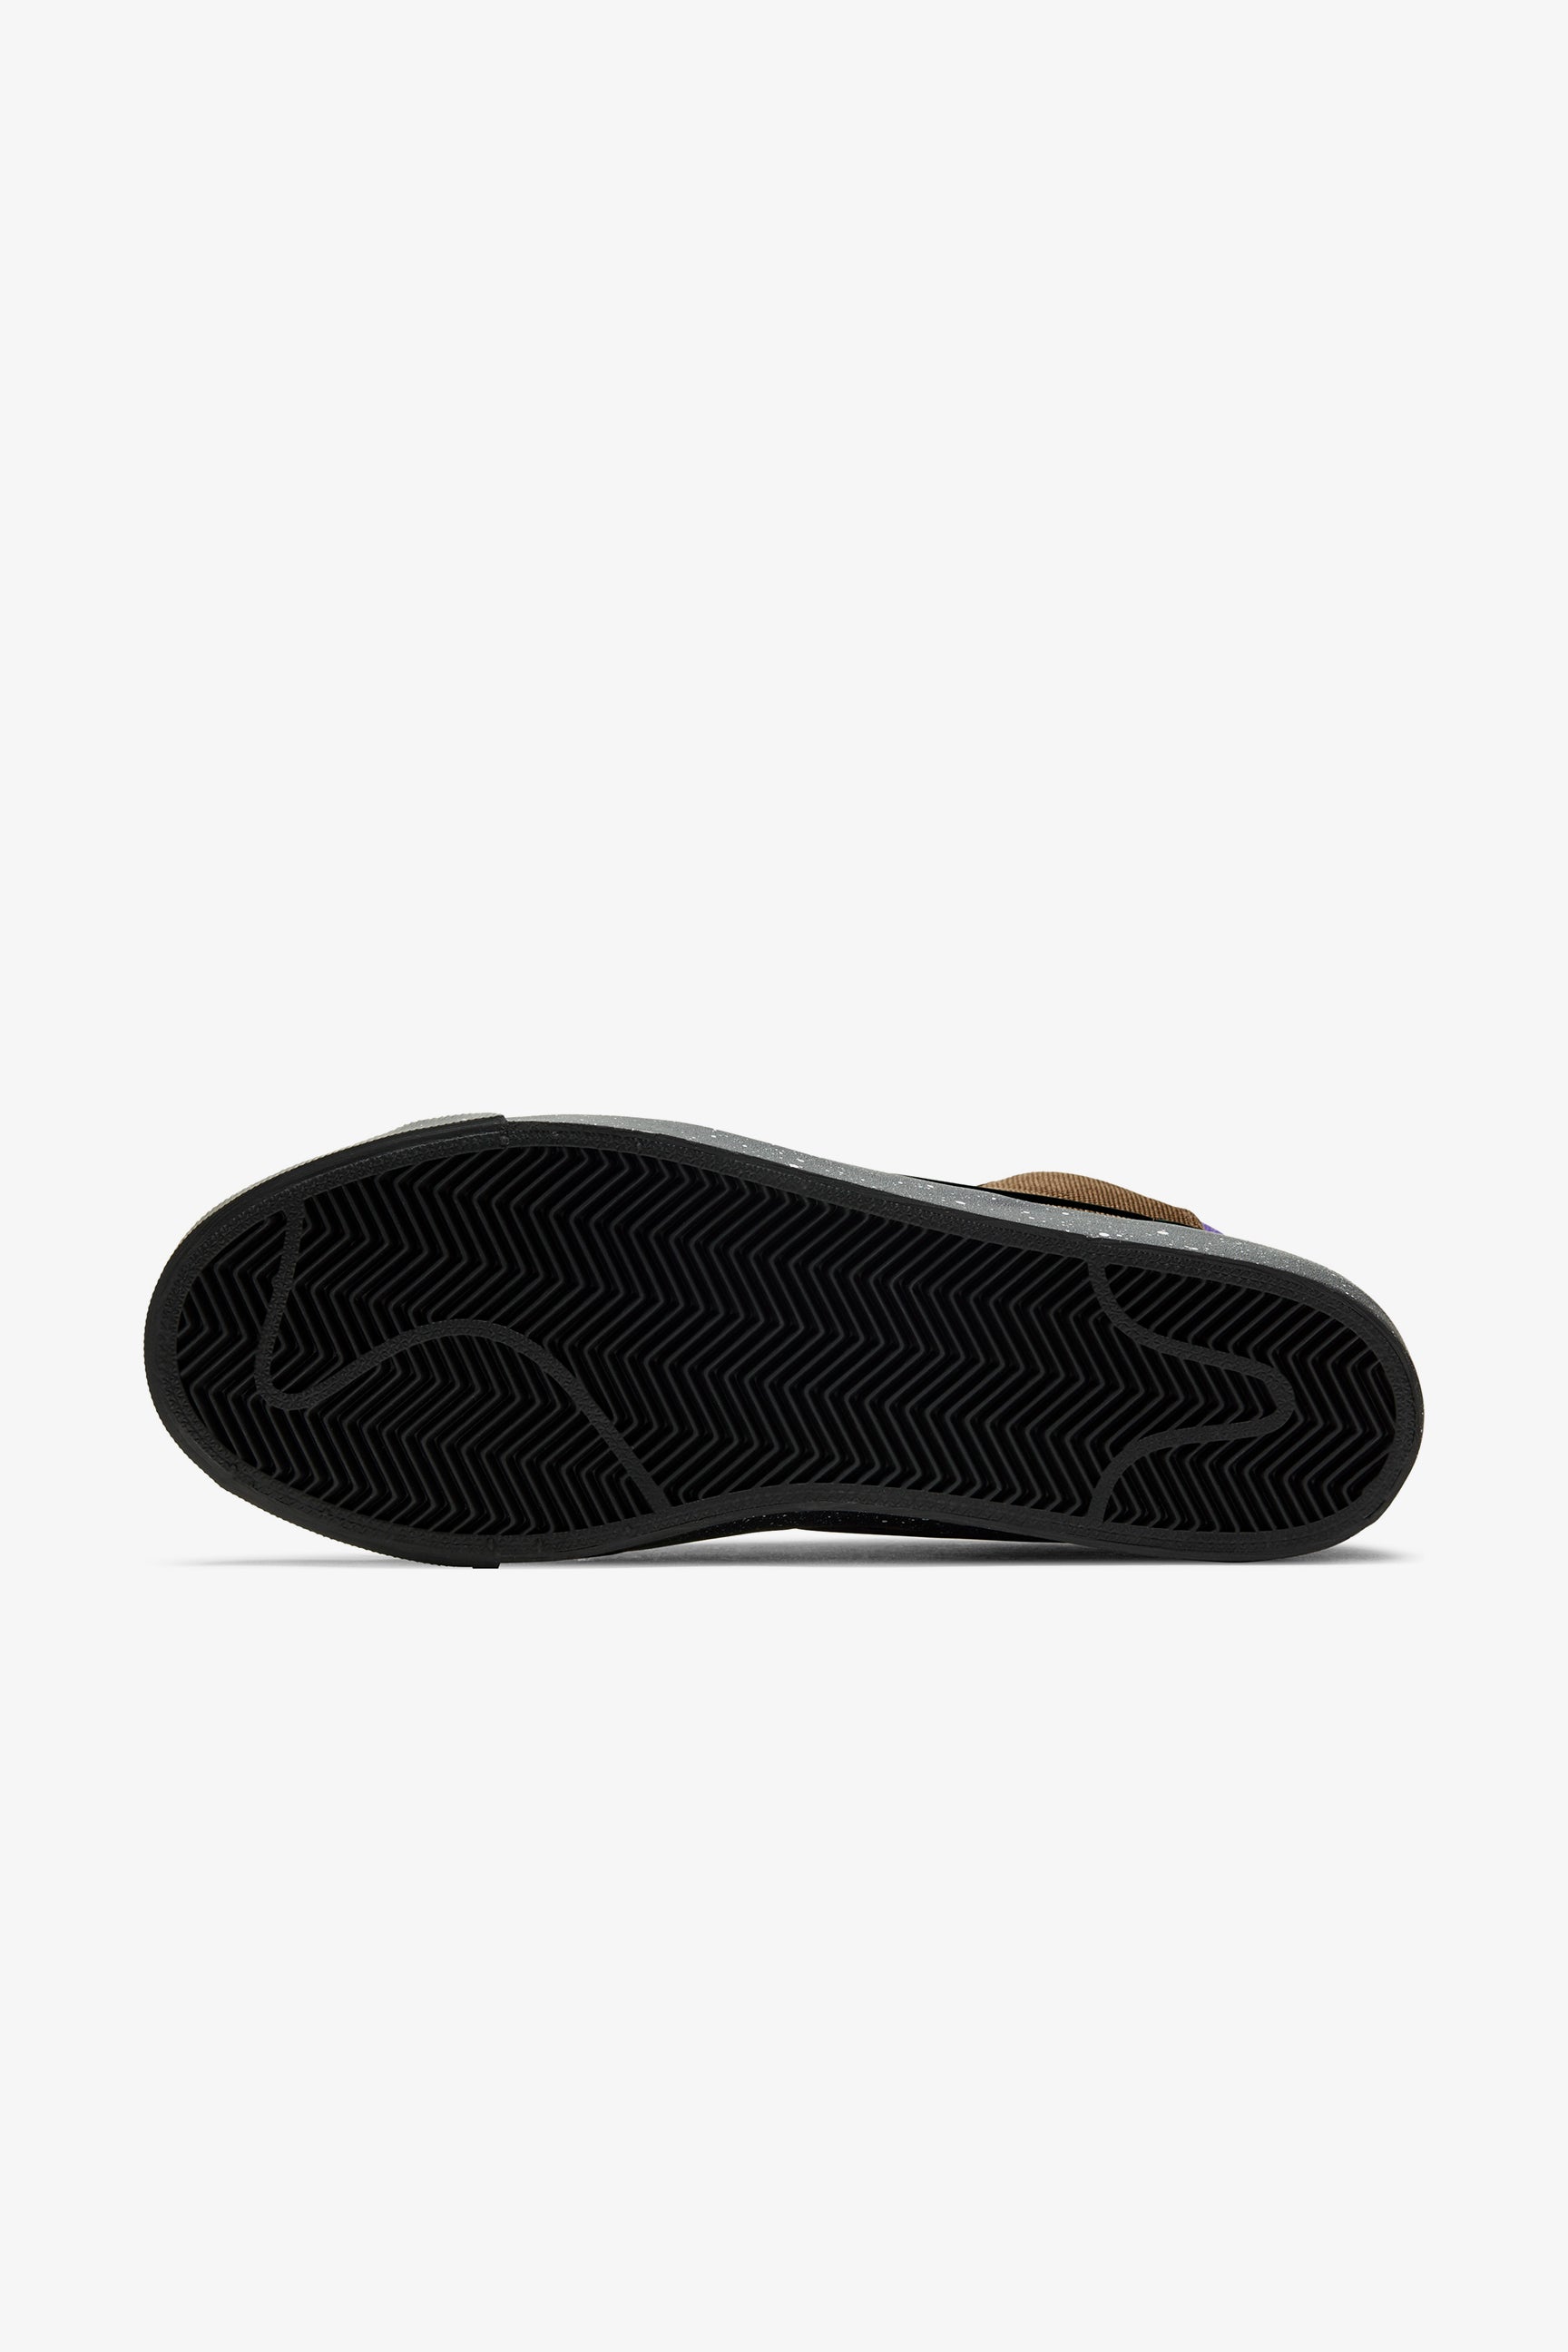 Selectshop FRAME - NIKE SB Zoom Blazer Mid GT "ACG" Footwear Dubai